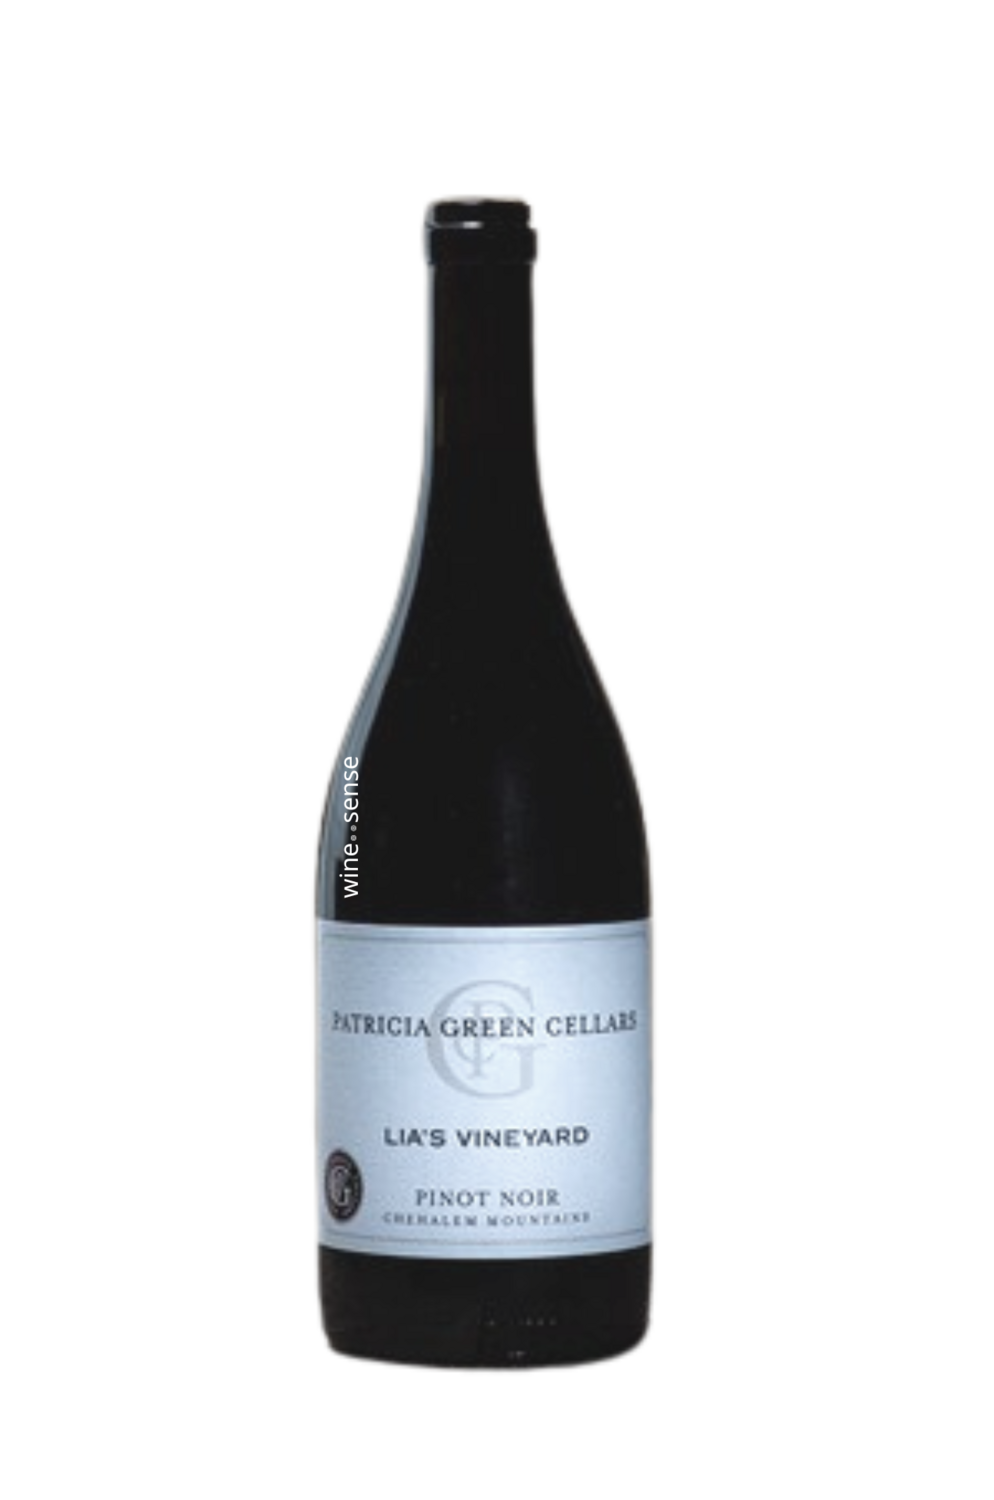 Patricia Green Pinot Noir Lia's Vineyard 